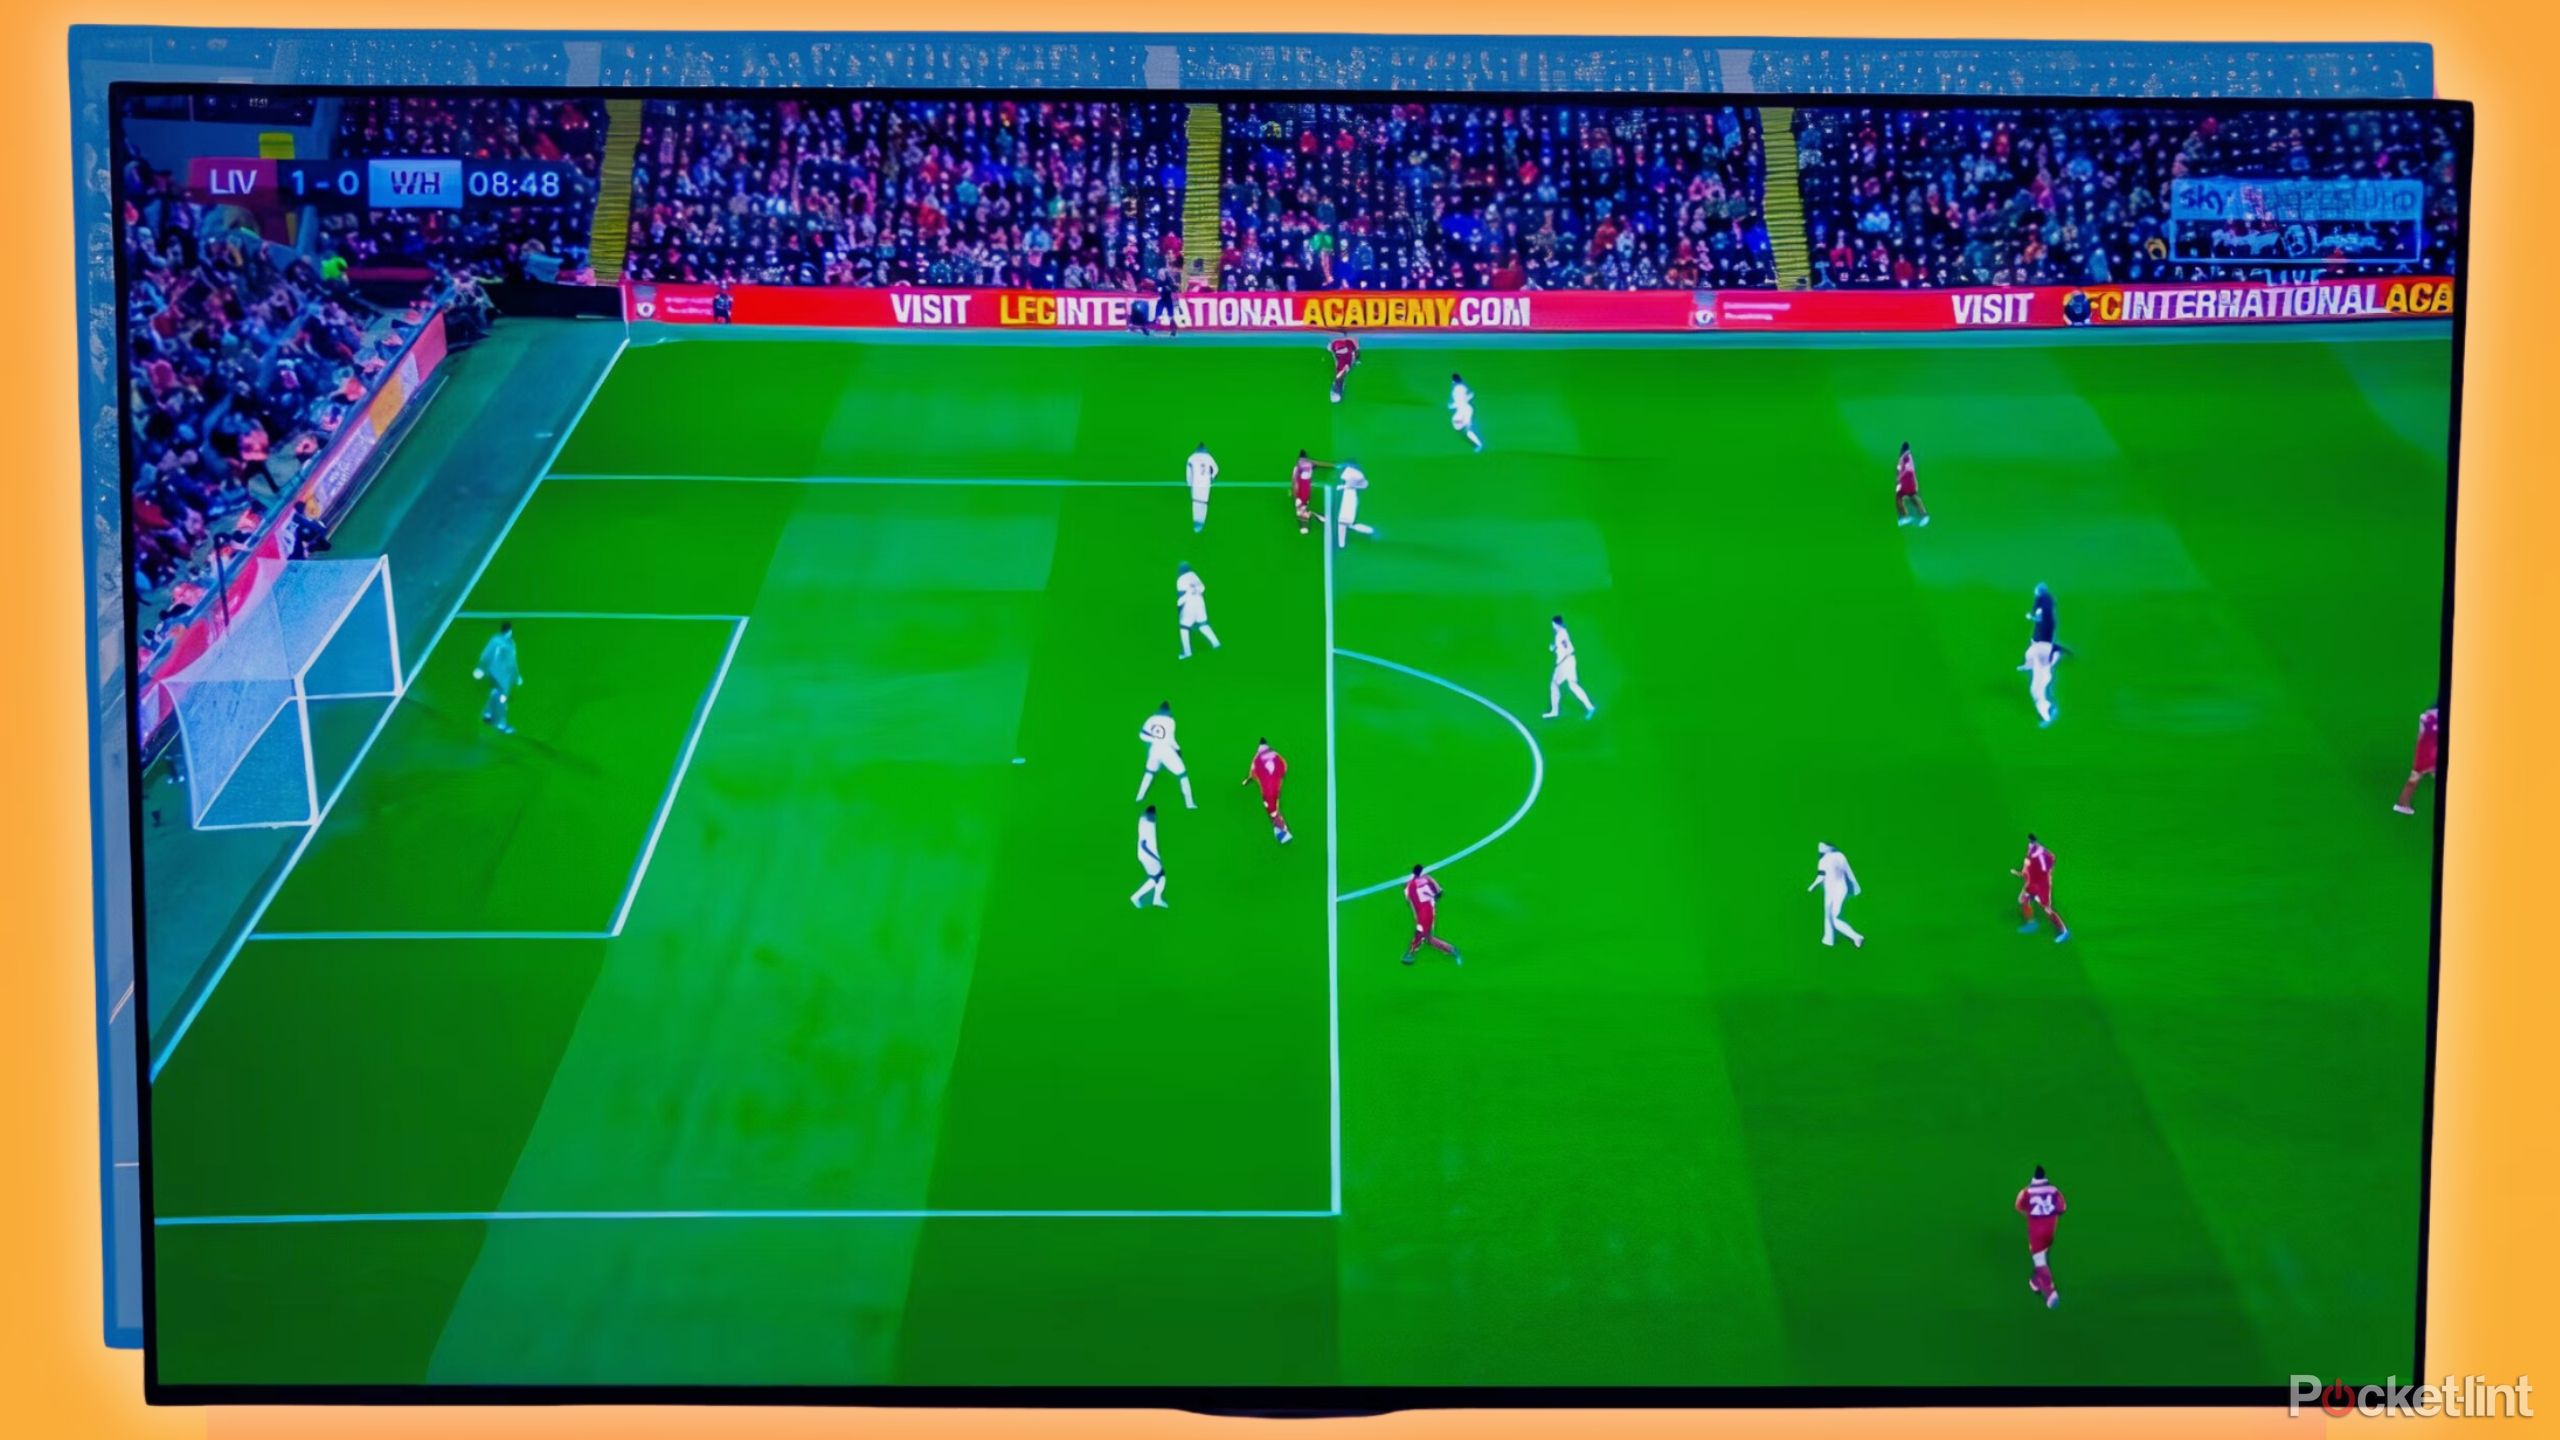 LG C2 tv displaying a soccer game.